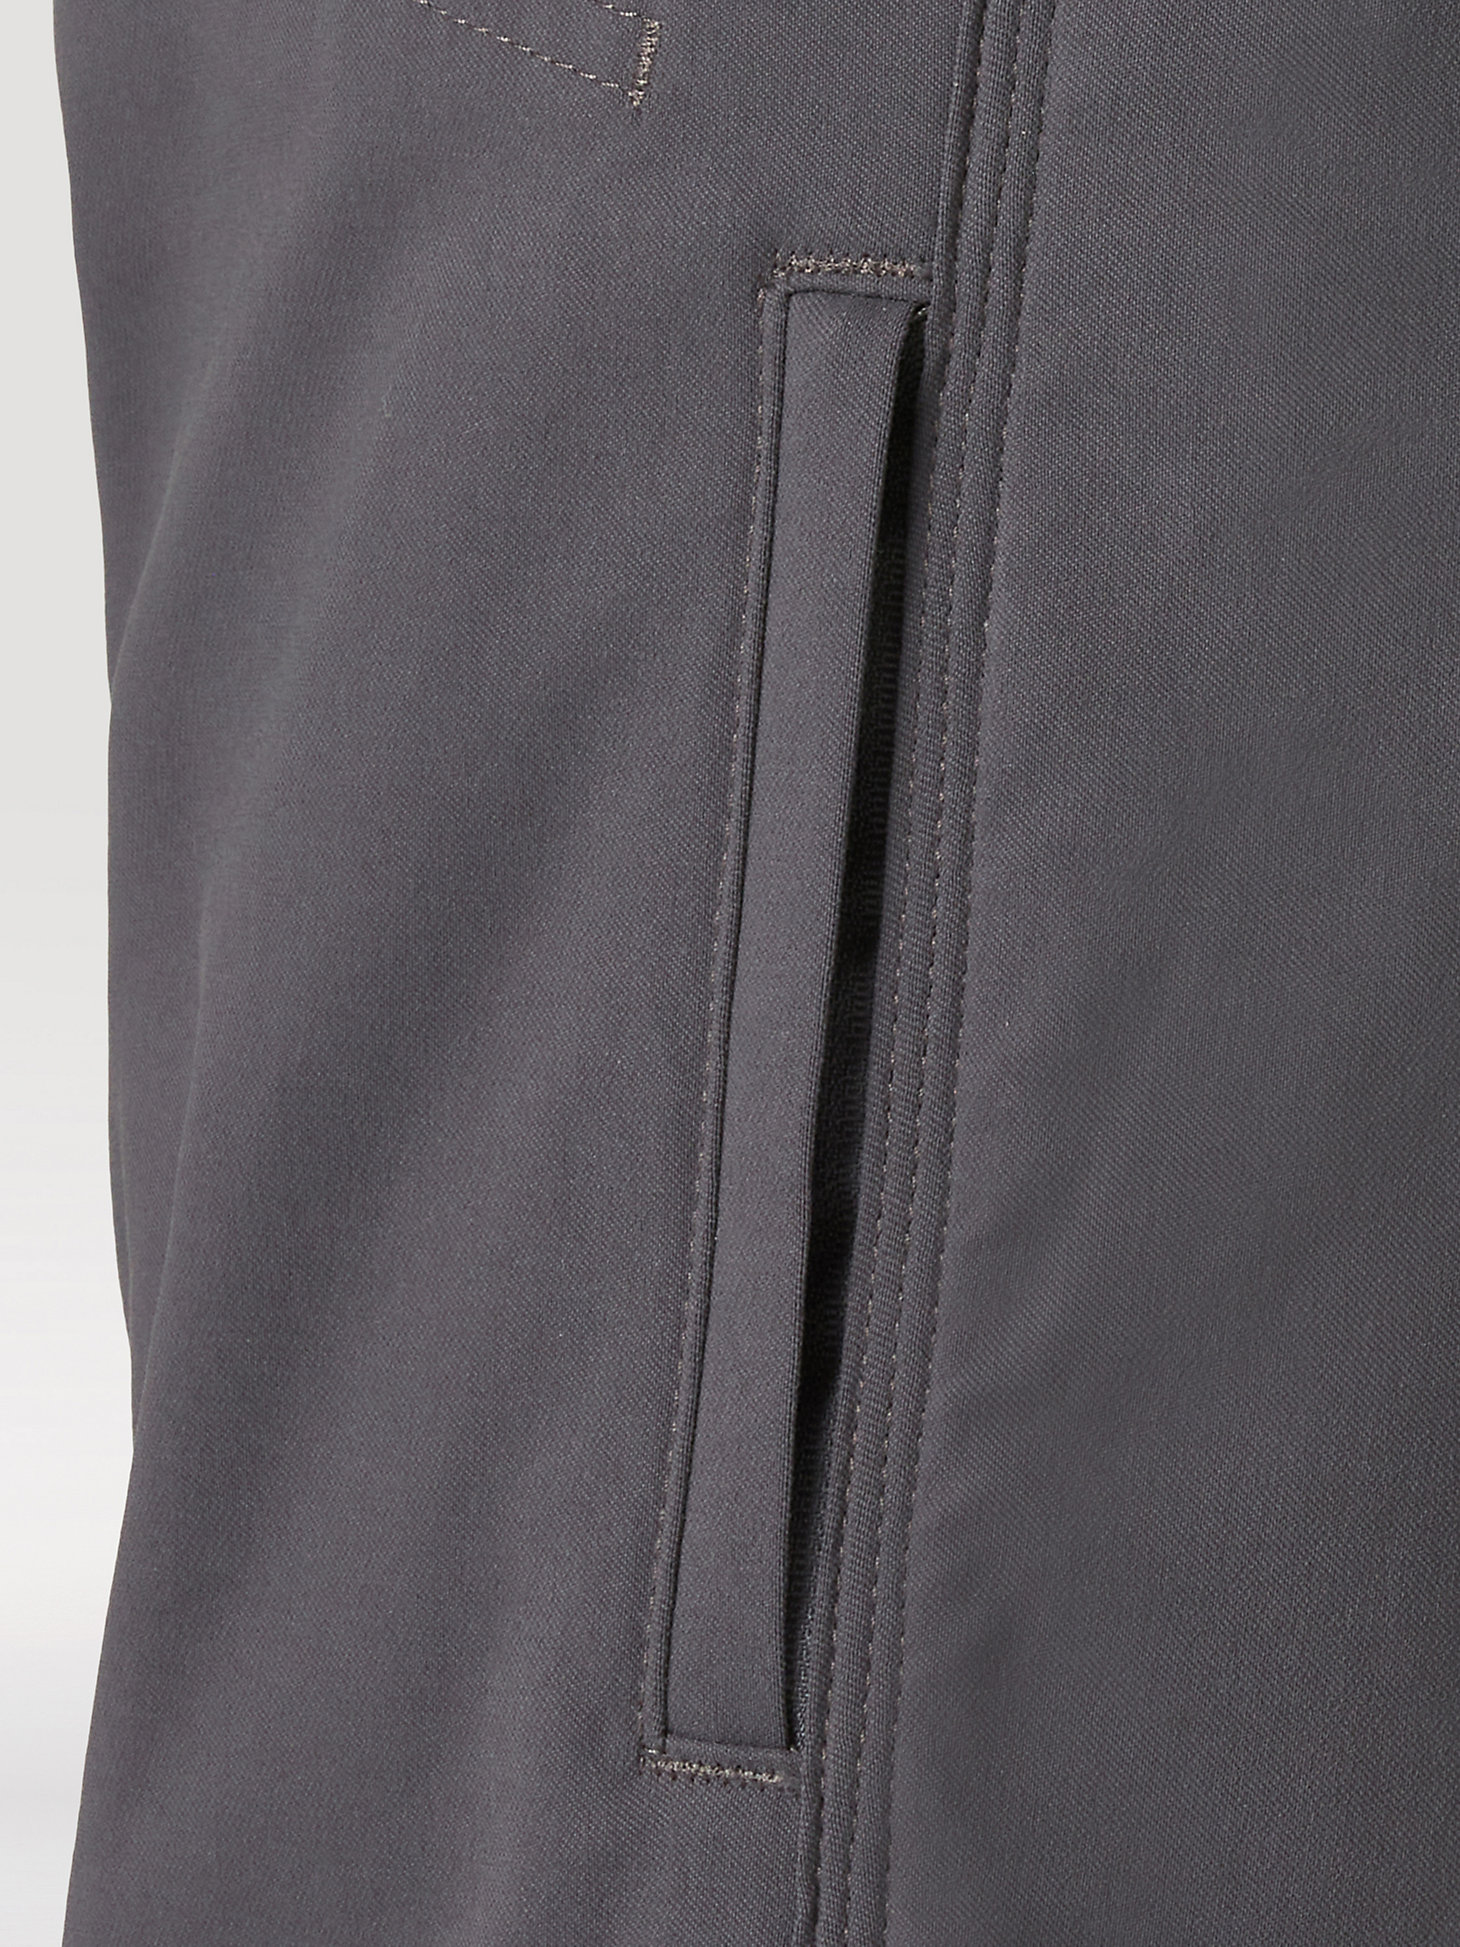 ATG by Wrangler™ Men's Fleece Lined Pant in Magnet alternative view 5